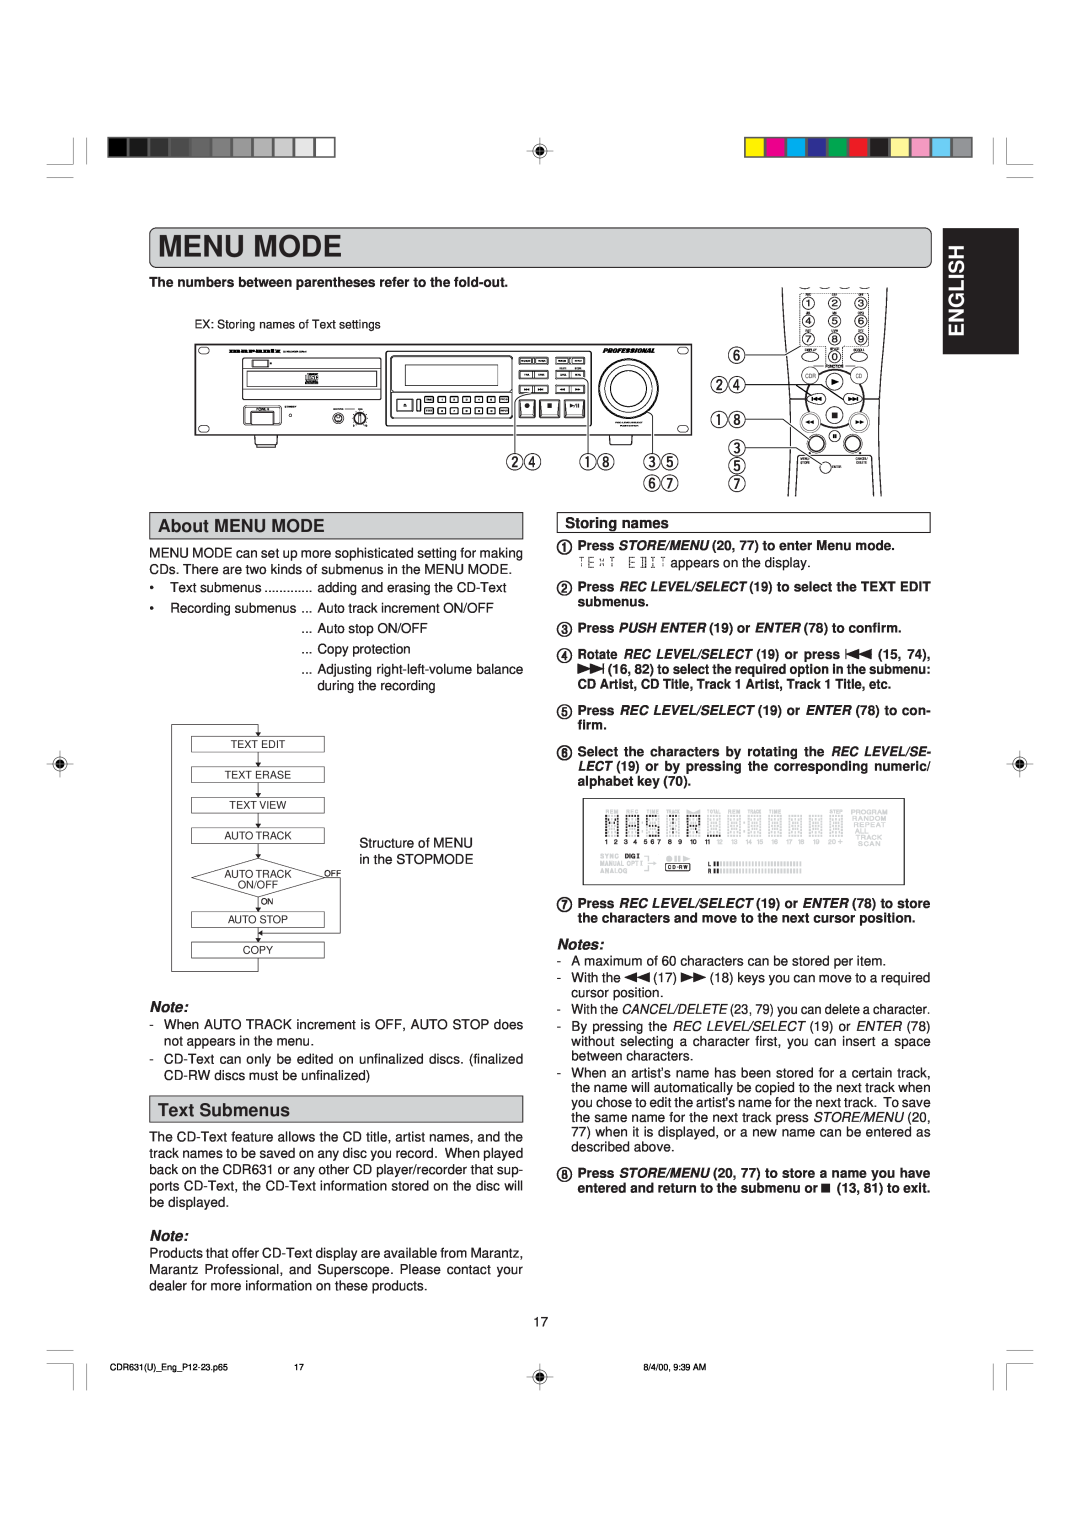 Marantz CDR631 manual Menu Mode, wr qi et, English, Storing names 